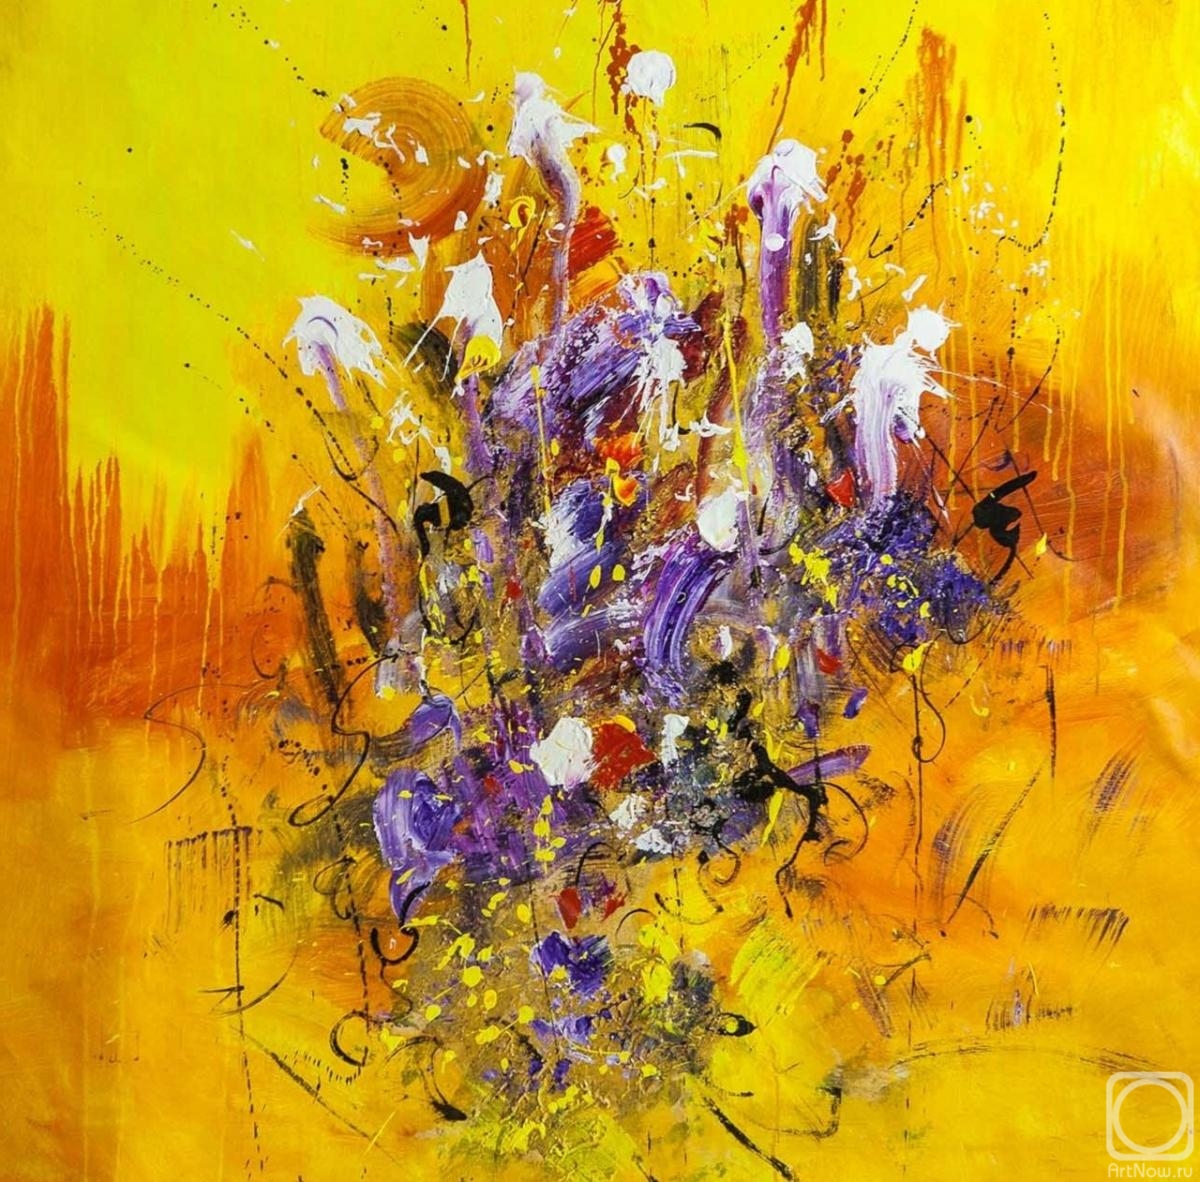 Dupree Brian. Irises on a yellow background